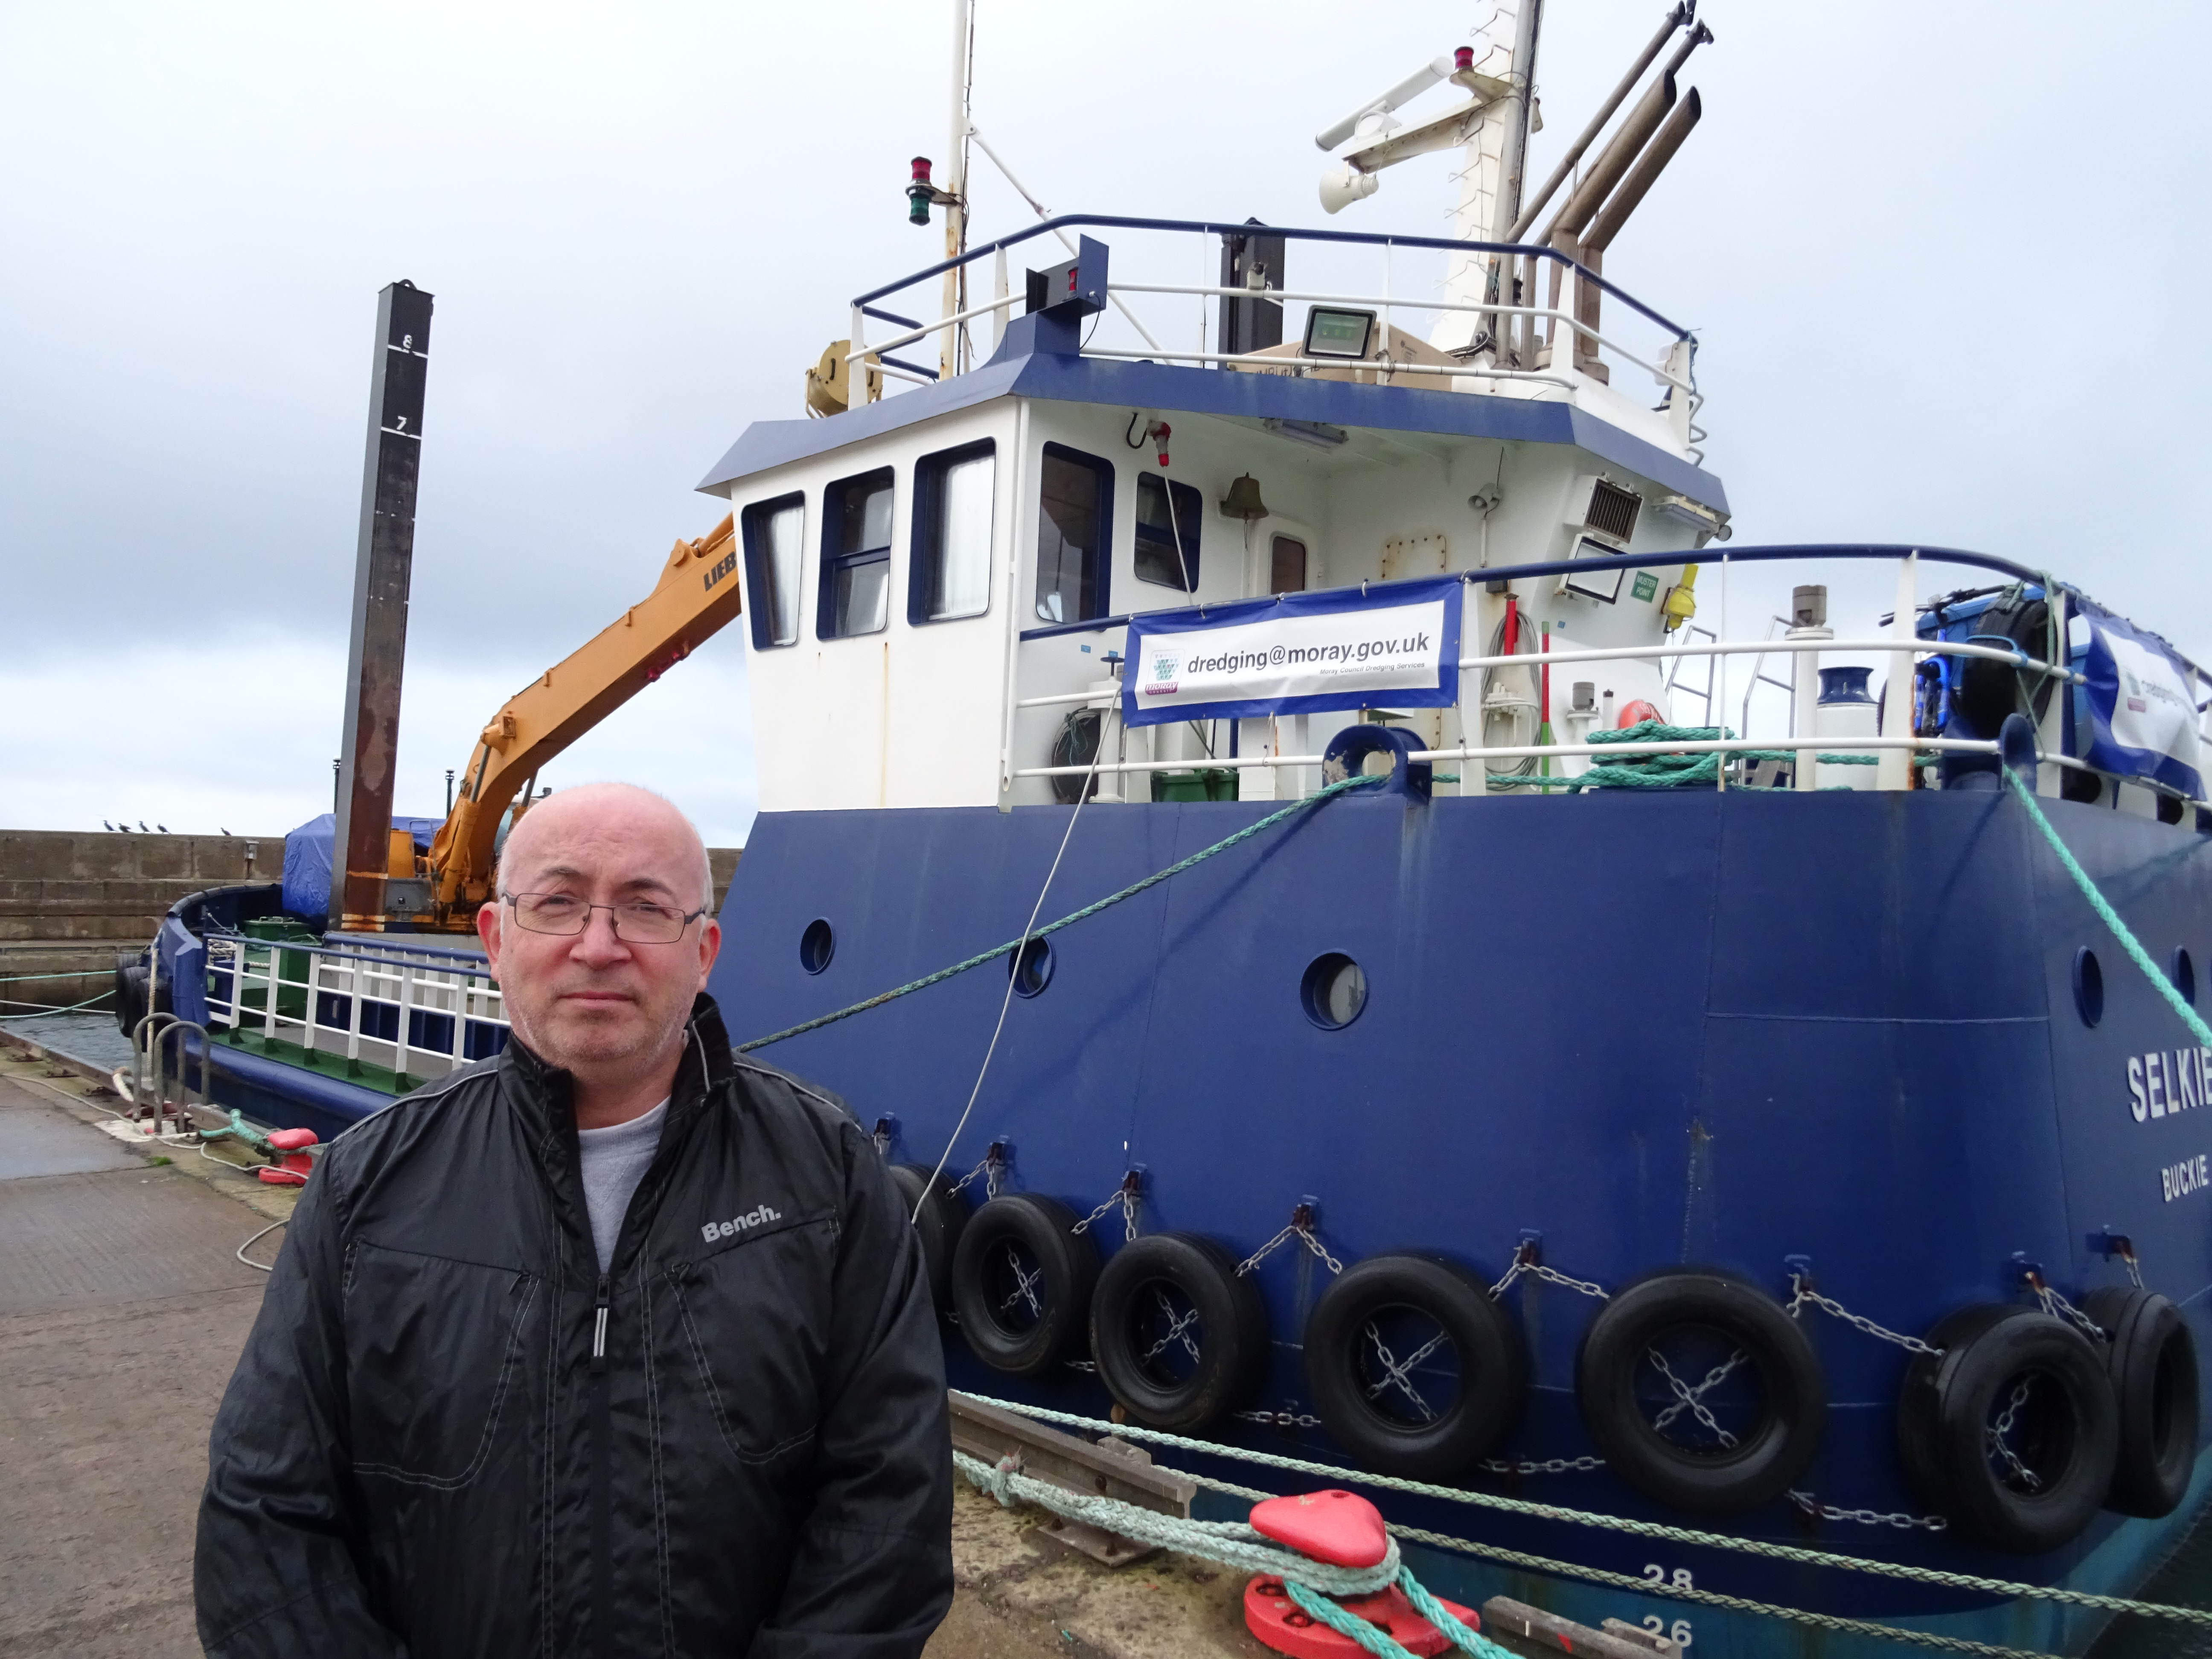 Marc Macrae beside the Moray Council dredger